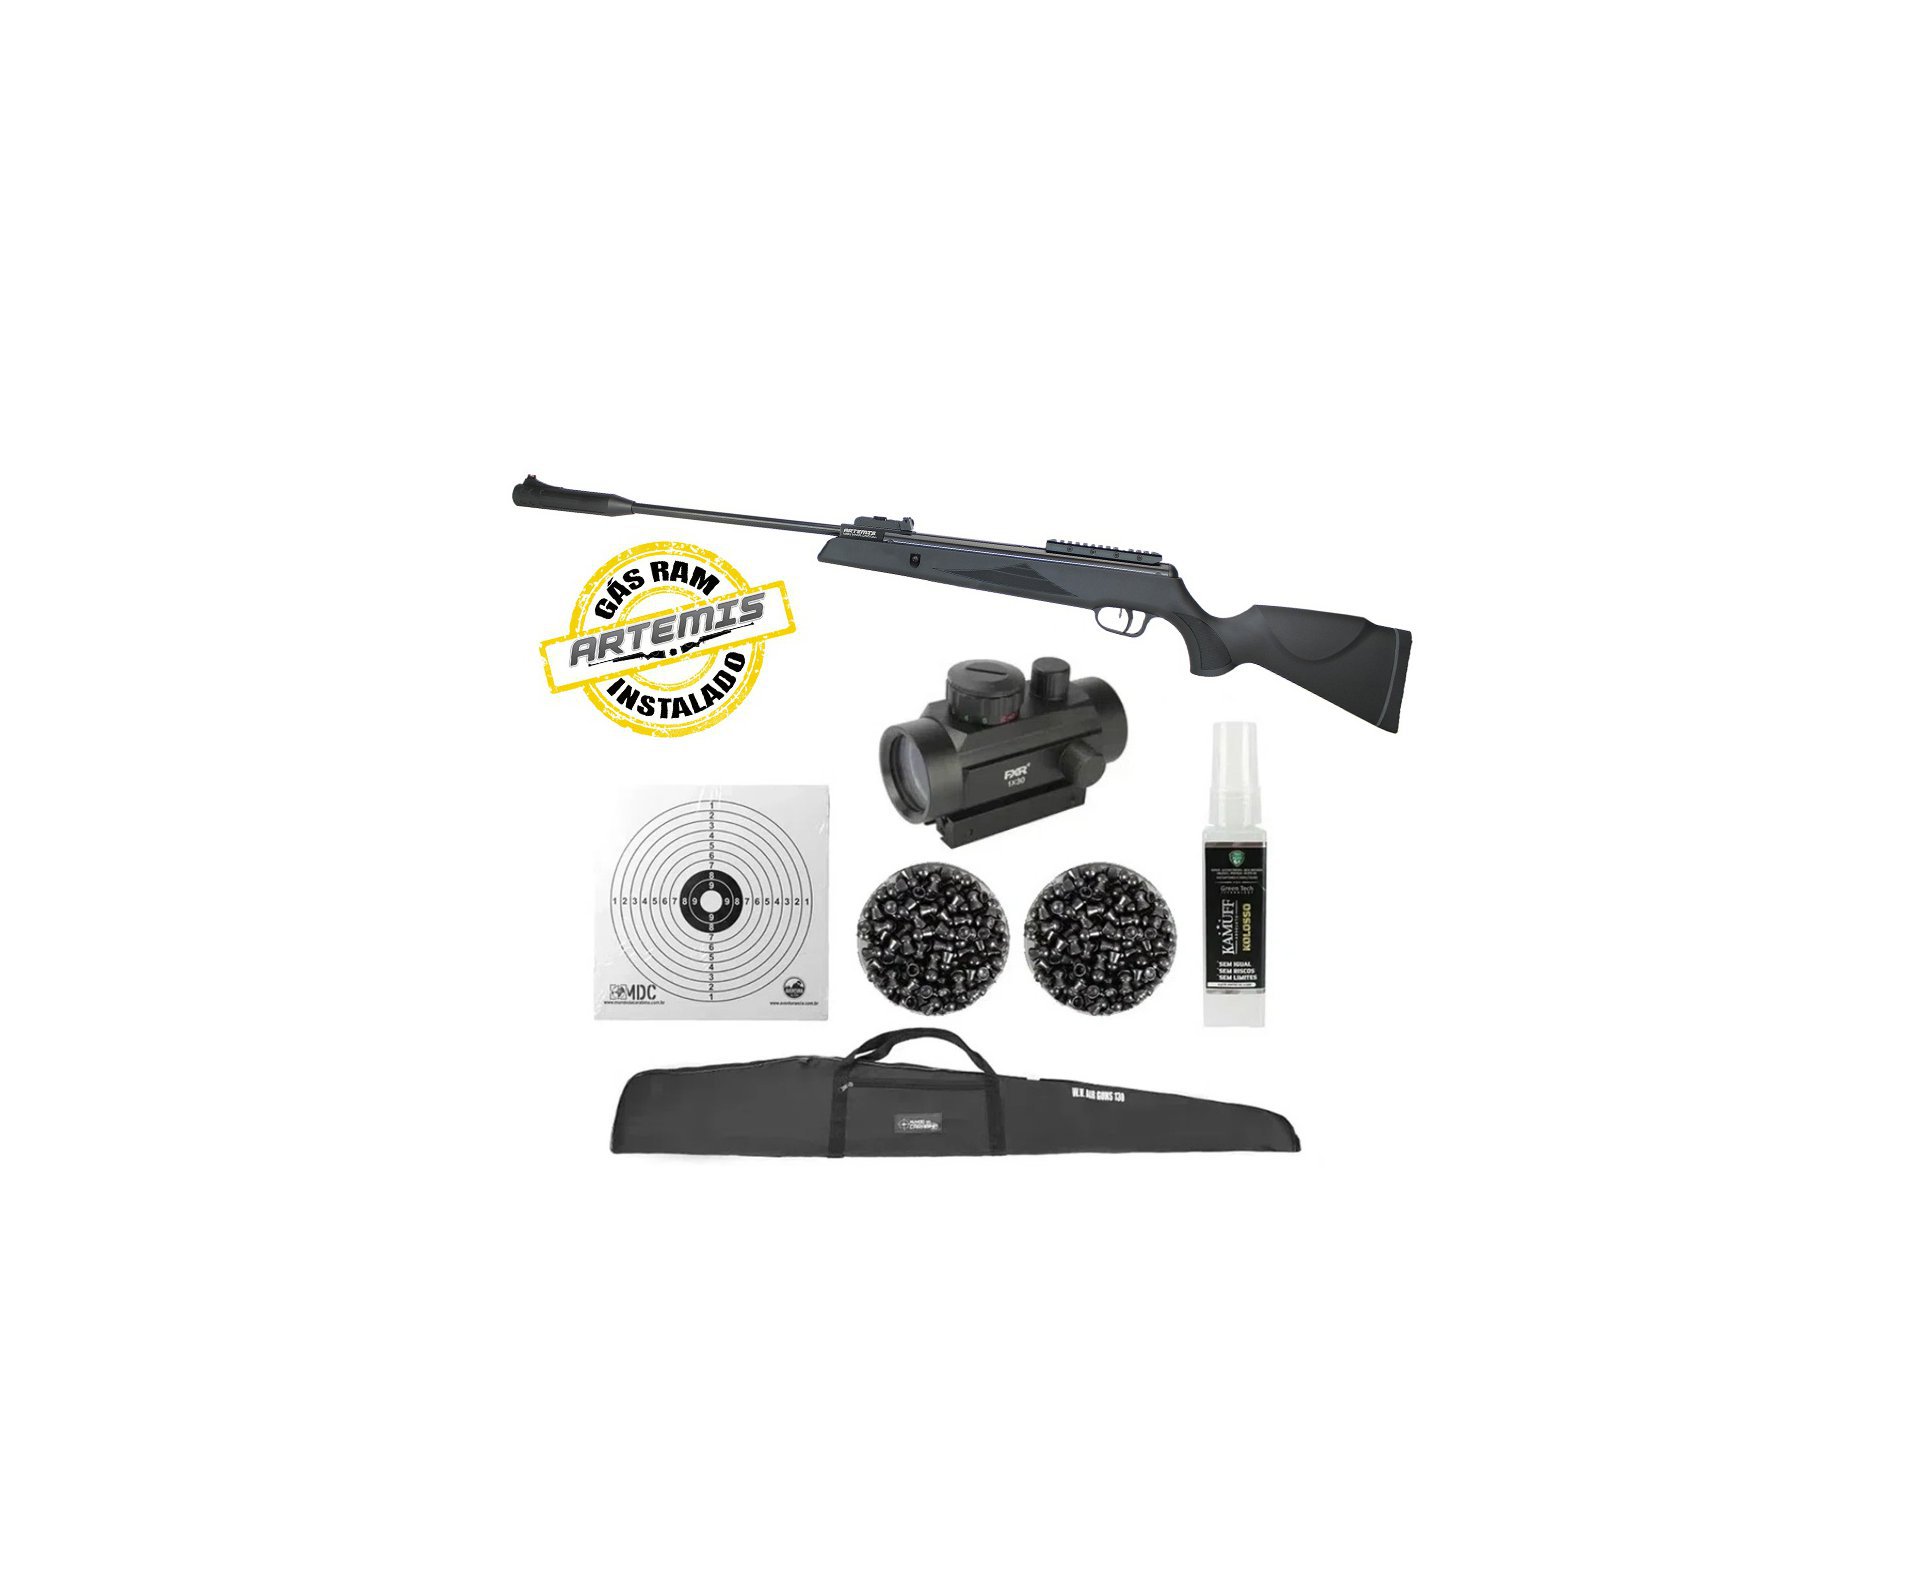 Carabina De Pressão Black Hawk Gas Ram 70kg 4.5mm Artemis + Red Dot + Capa + Kit